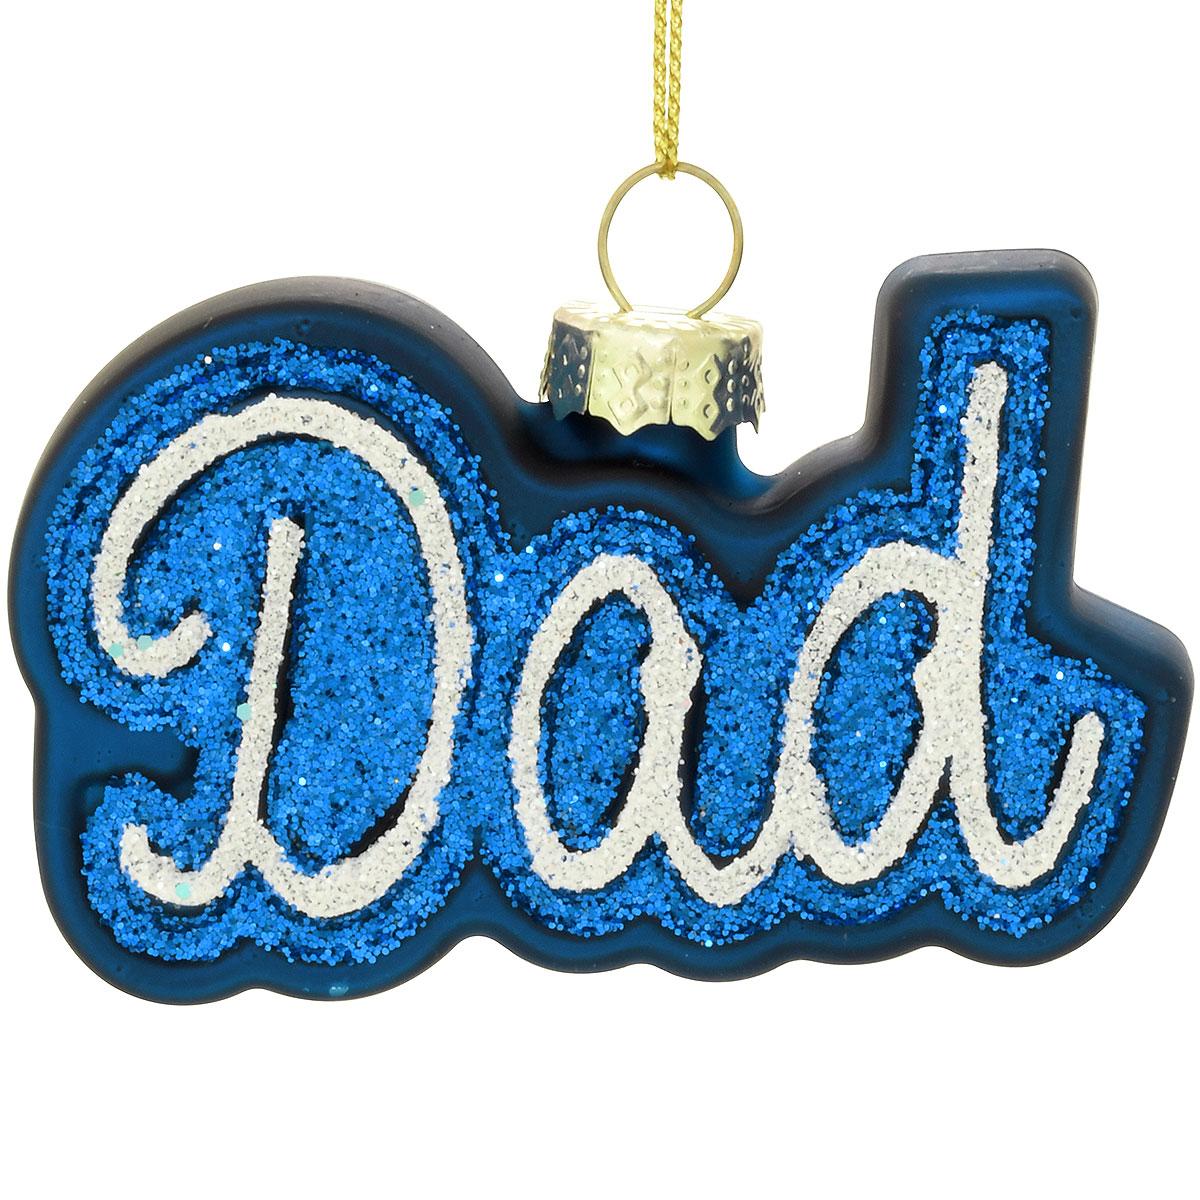 Dad Glass Ornament